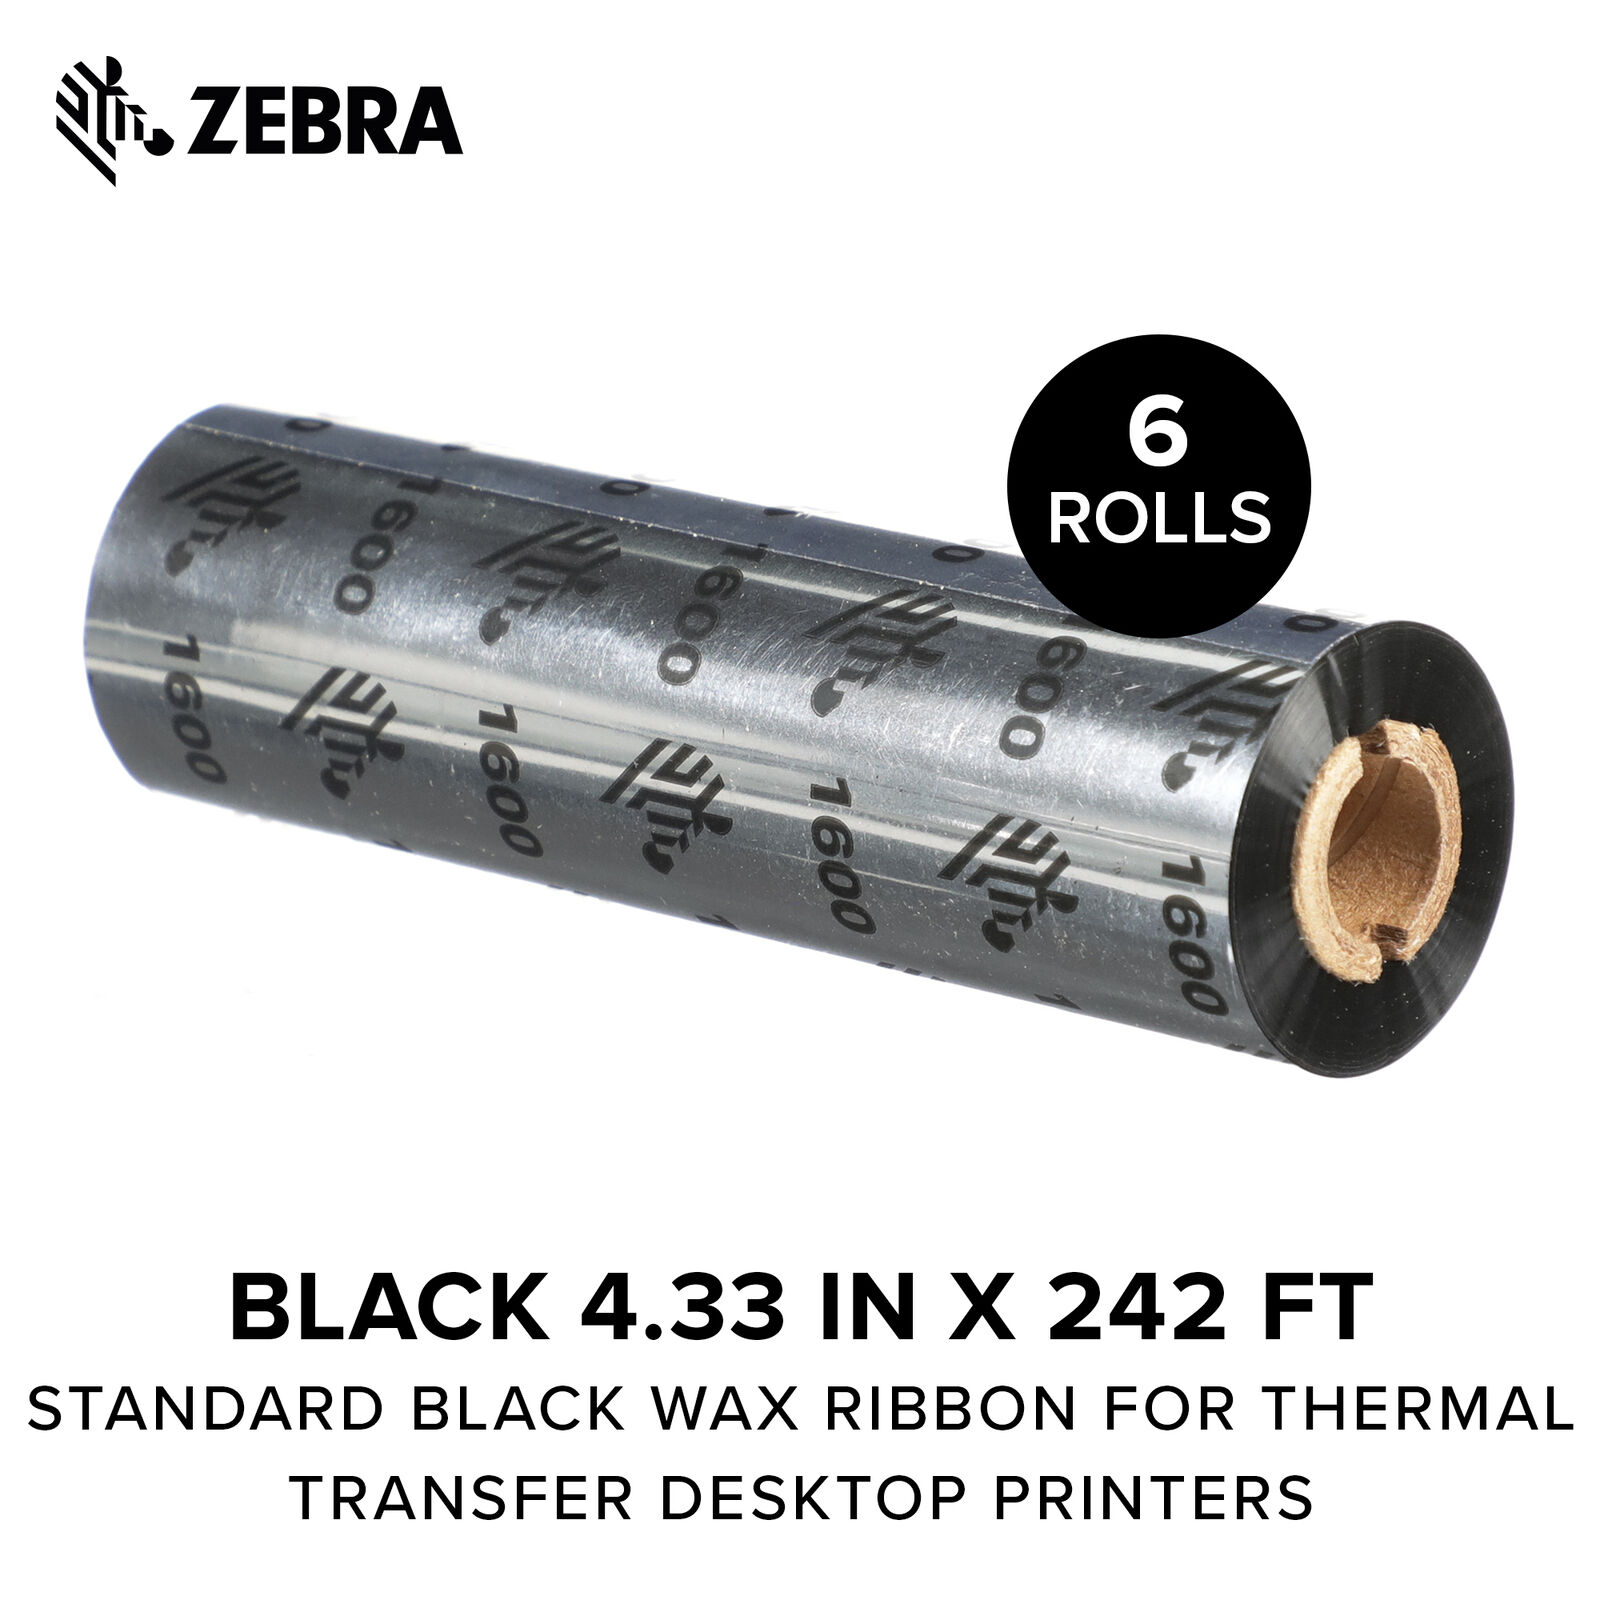 Zebra Black Wax Ribbon Thermal Transfer Printers Width 4.33